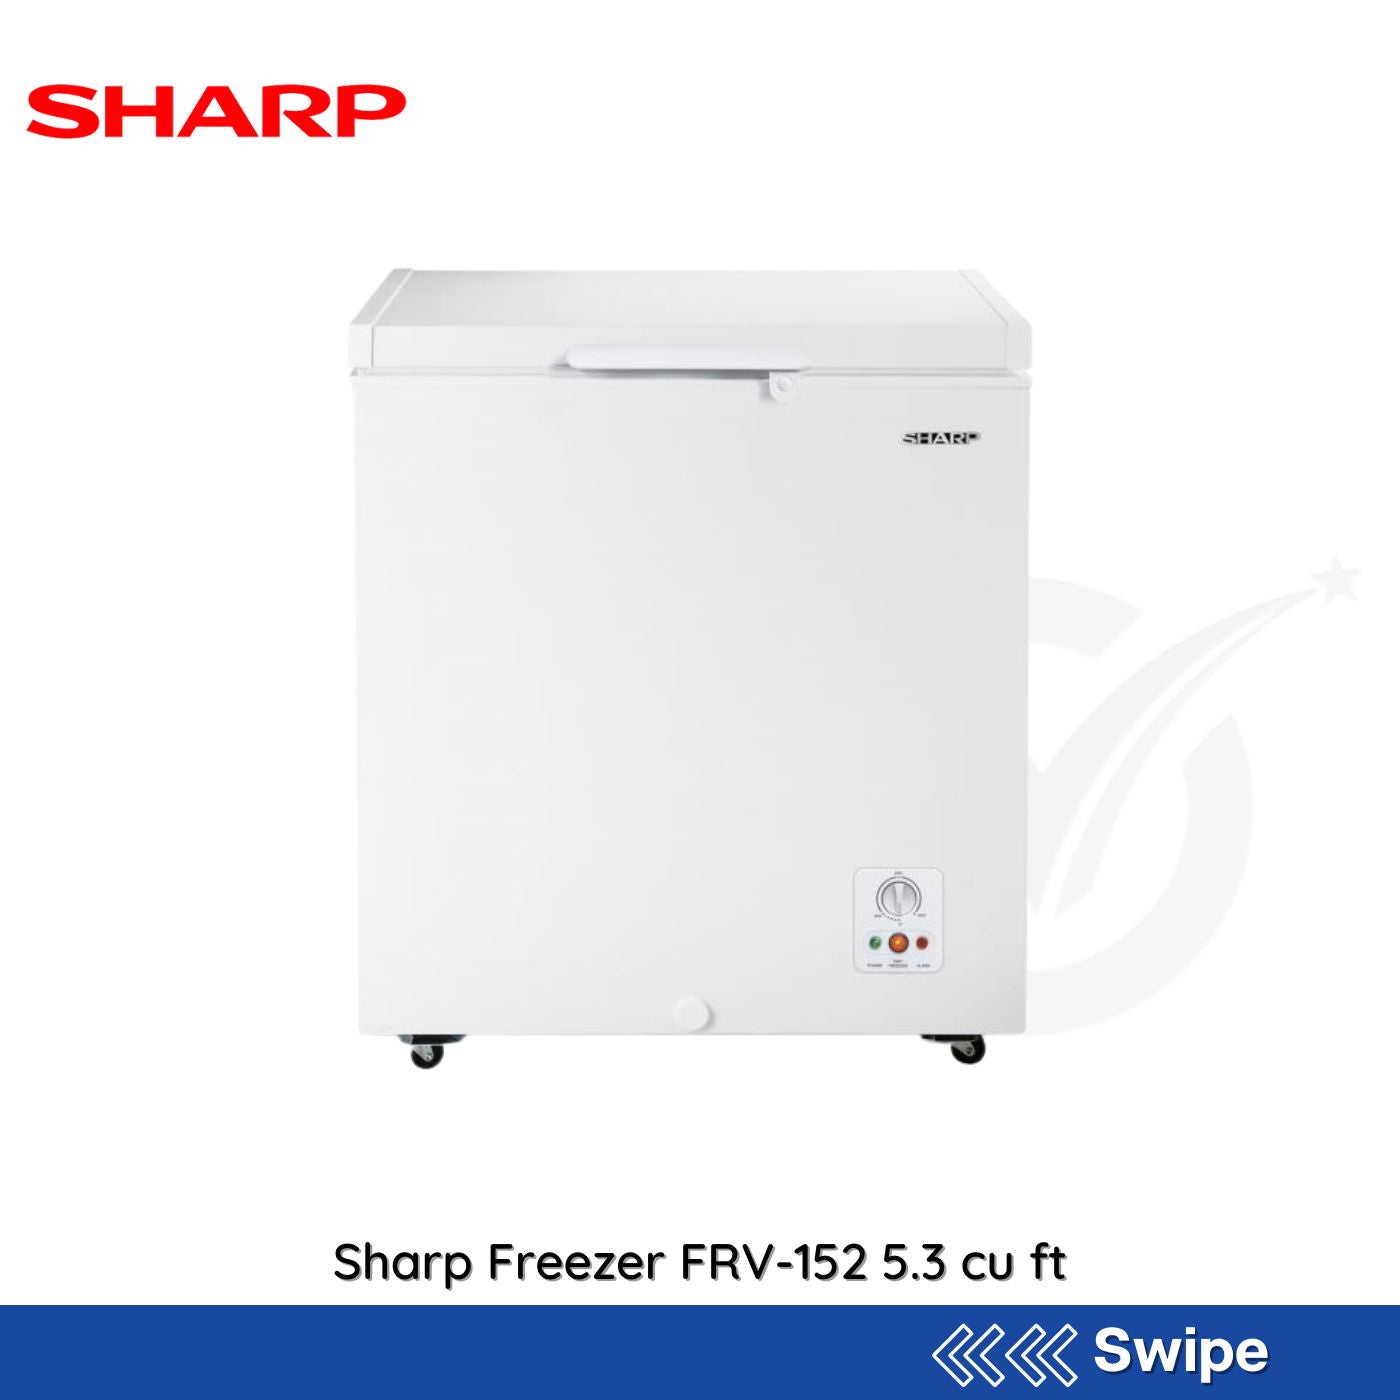 Sharp Freezer FRV-152 5.3 cu ft - People's Choice Marketing